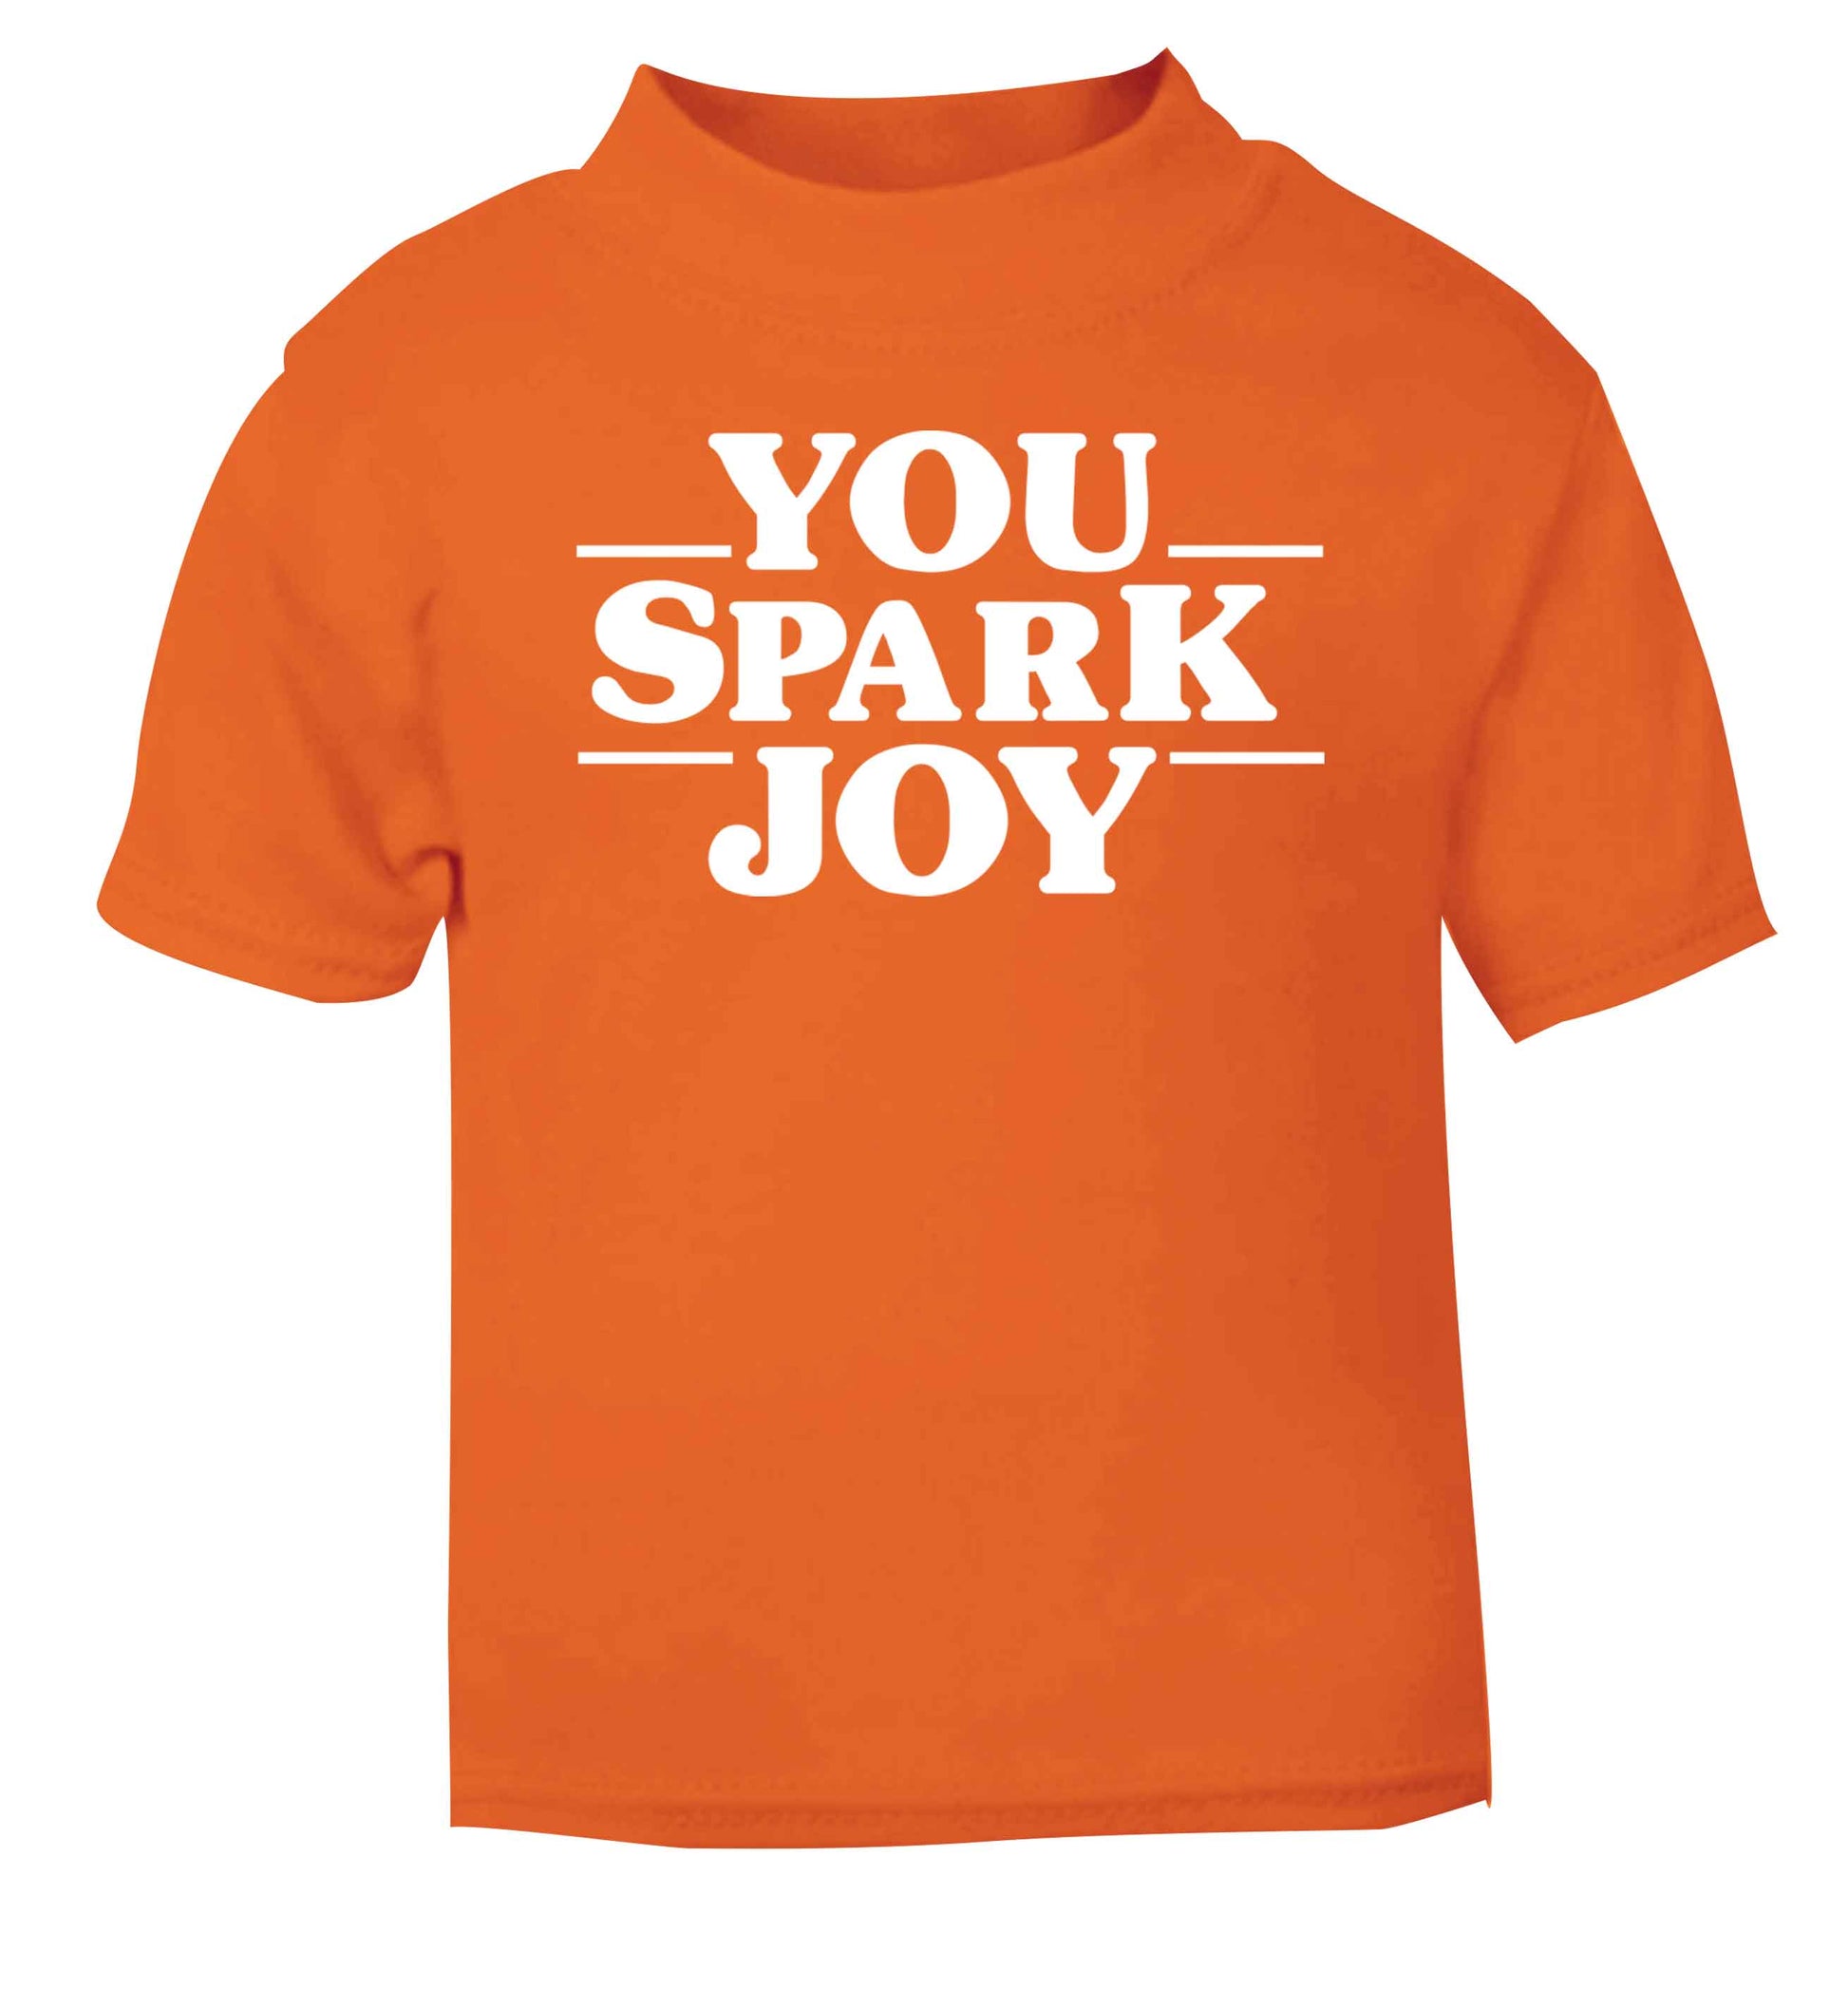 You spark joy orange baby toddler Tshirt 2 Years